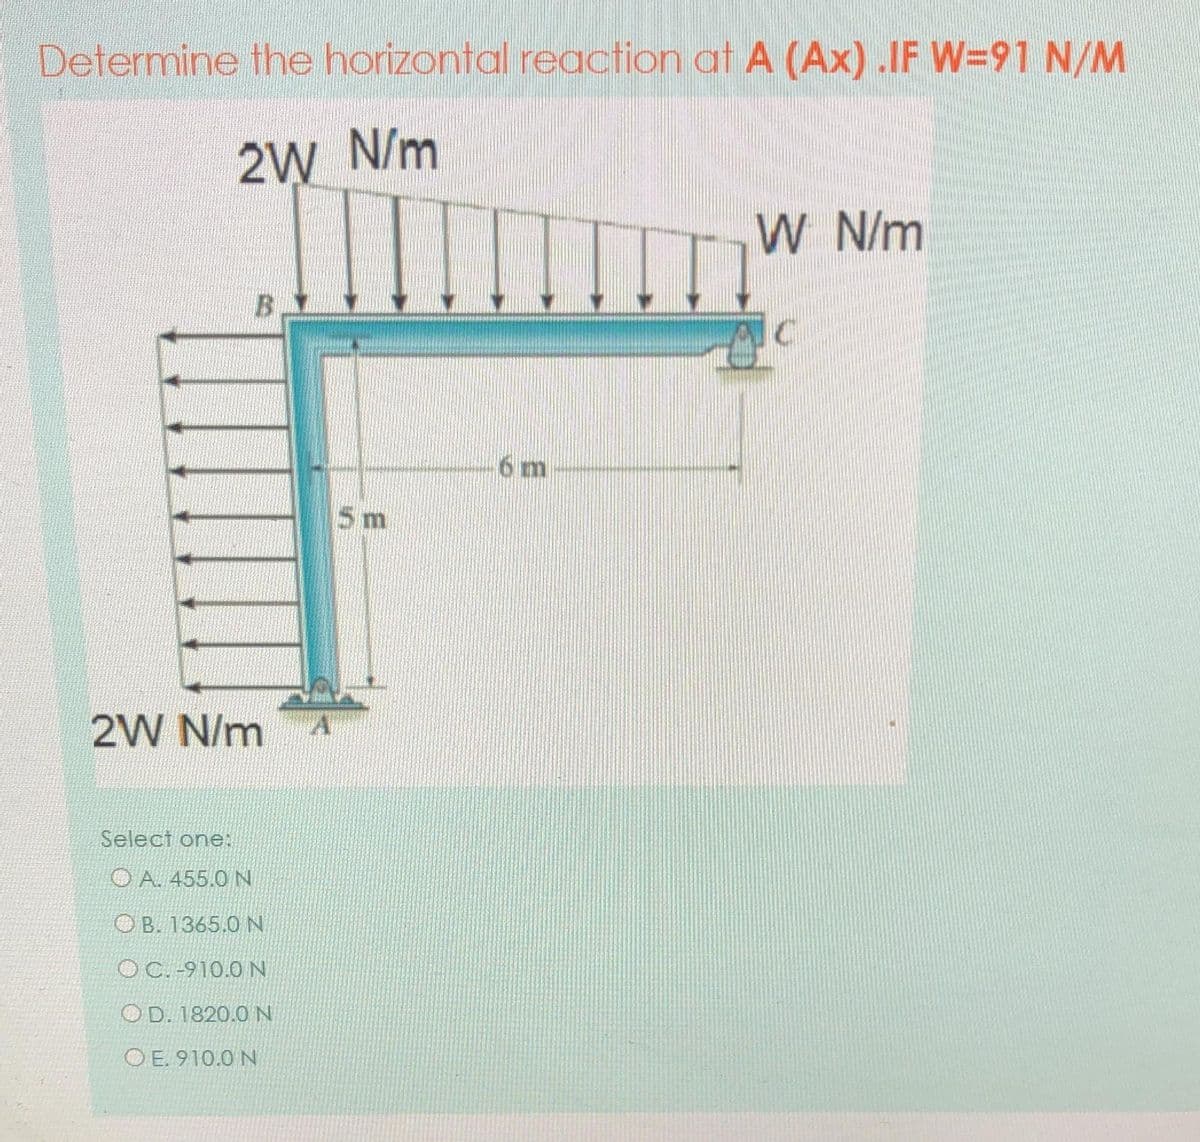 Determine the horizontal reaction at A (Ax) .IF W=91 N/M
2W N/m
W N/m
B.
6 m
5m
2W N/m
Select one:
O A. 455.0 N
O B. 1365.0 N
O C. -910.0 N
O D. 1820.0 N
O E. 910.0 N
